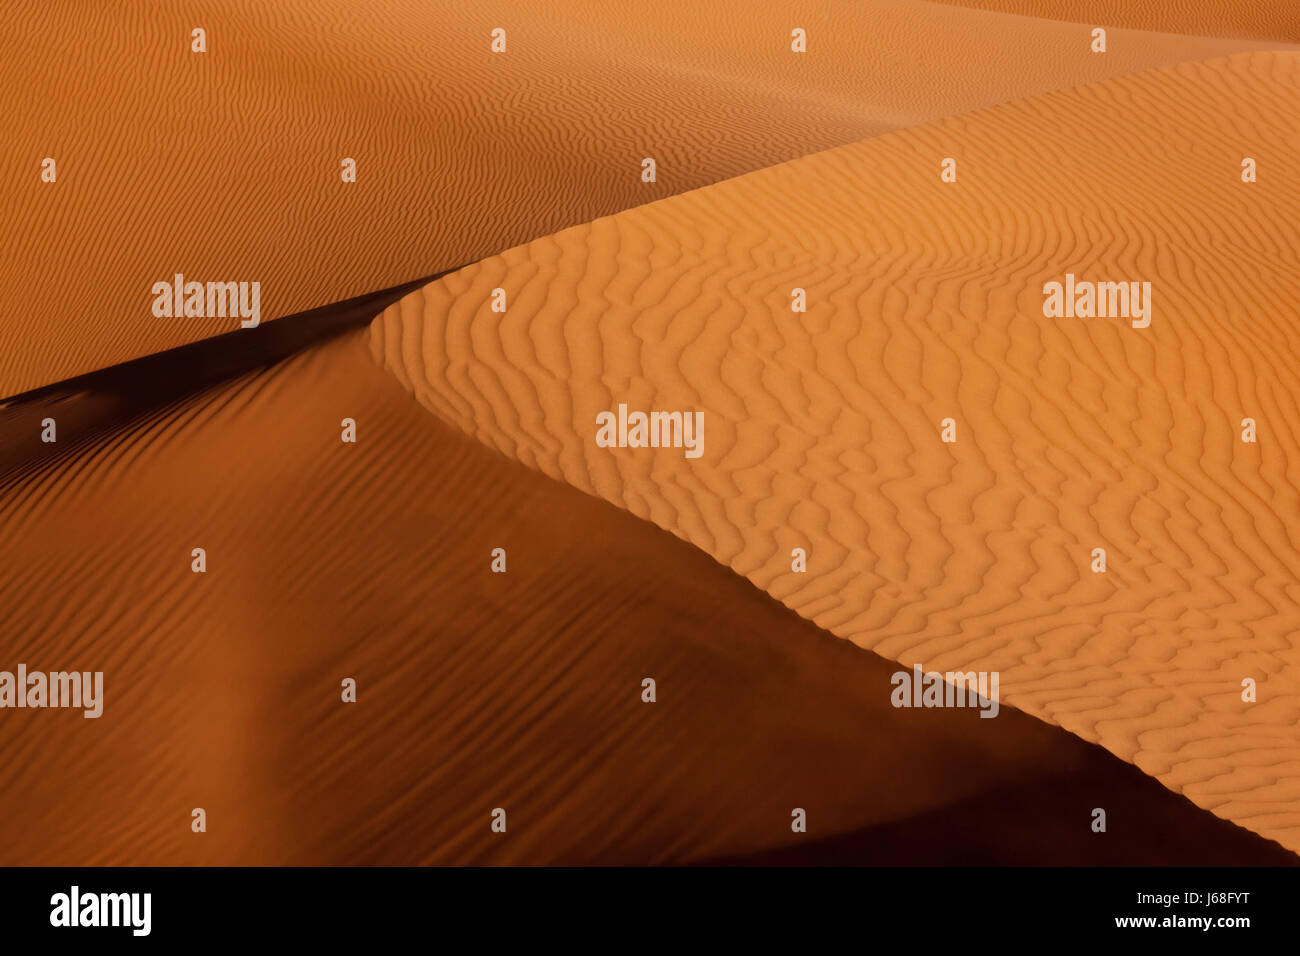 desert wasteland dune pattern backdrop background sands sand texture sunset Stock Photo